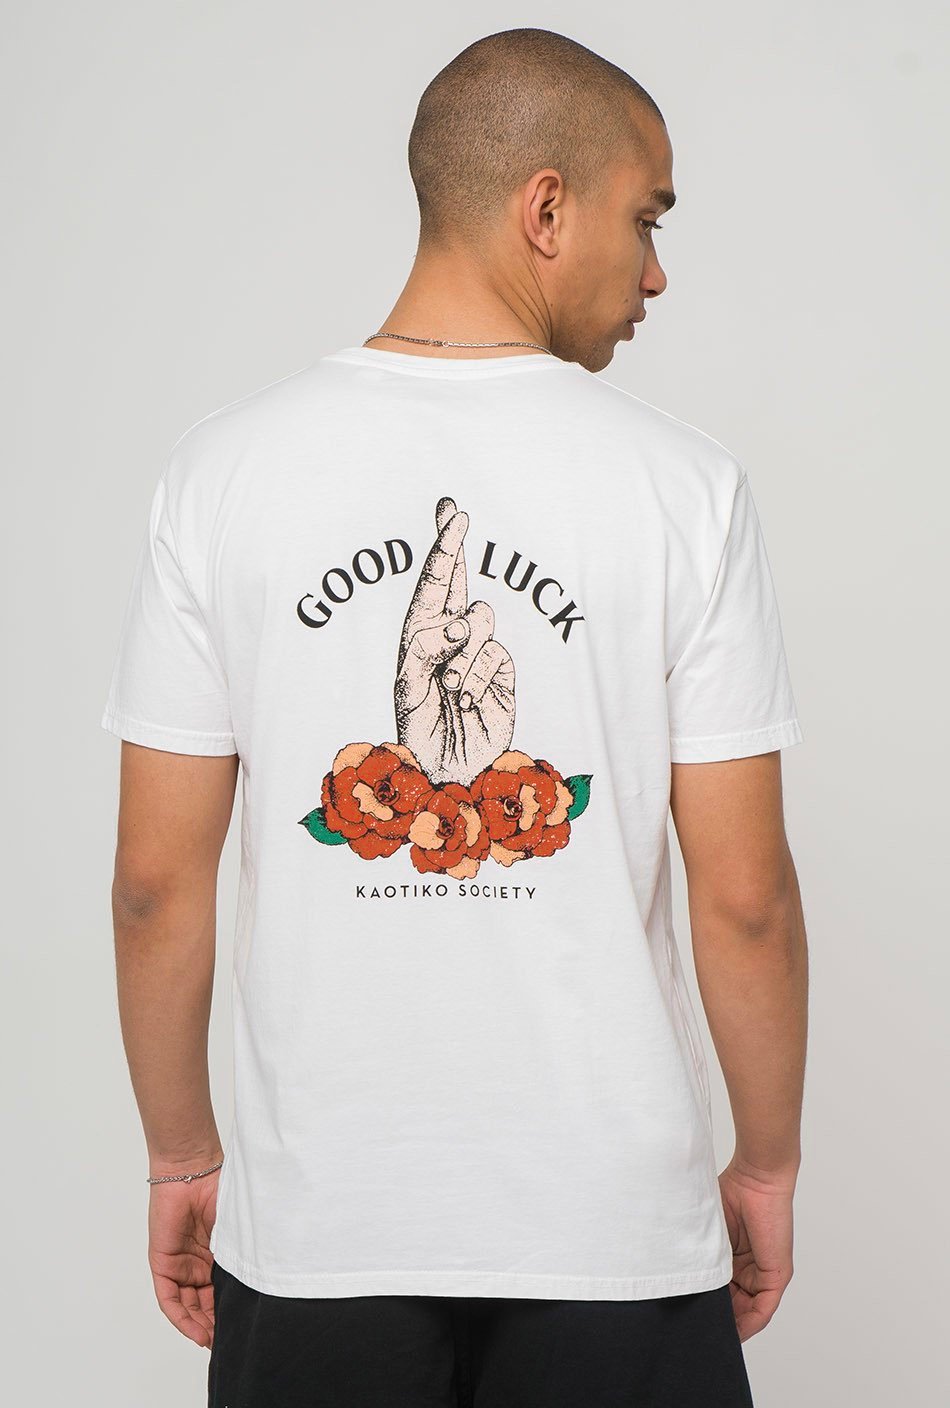 Camiseta "Good Luck" Blanca